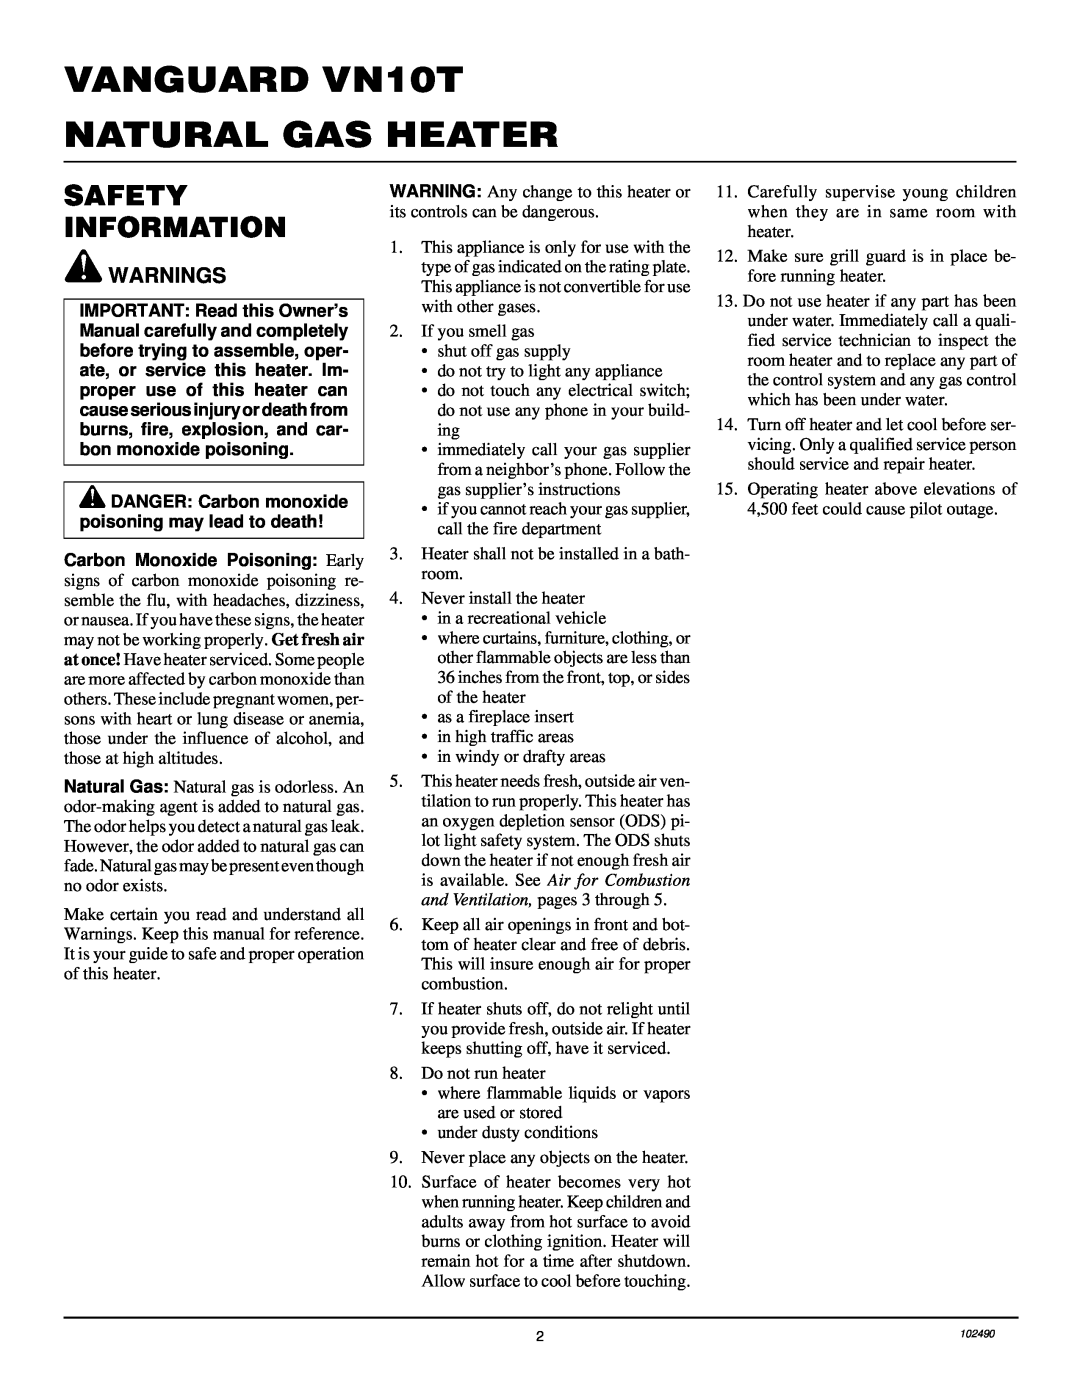 Desa installation manual VANGUARD VN10T NATURAL GAS HEATER, Safety Information, Warnings 